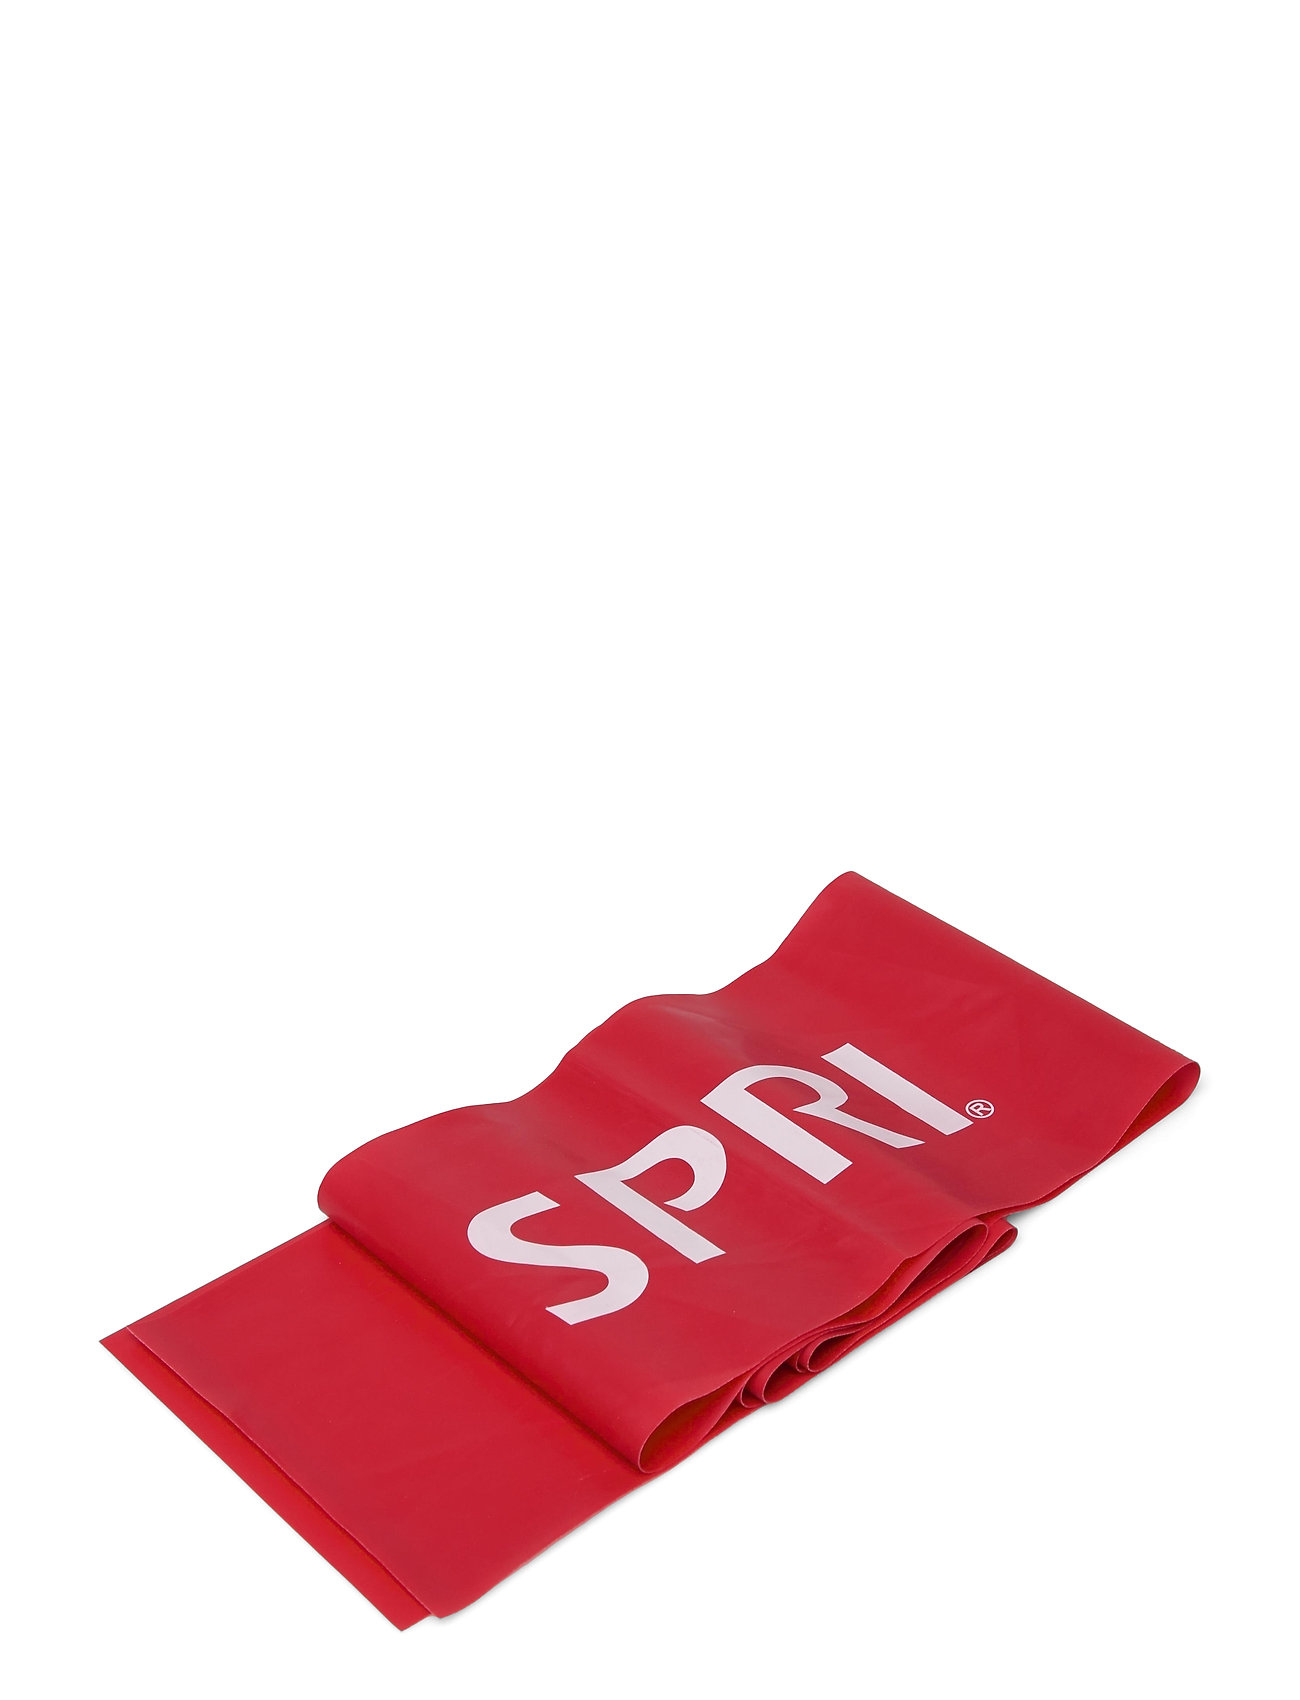 Spri Flat Band Medium Accessories Sports Equipment Workout Equipment Resistance Bands Punainen Spri